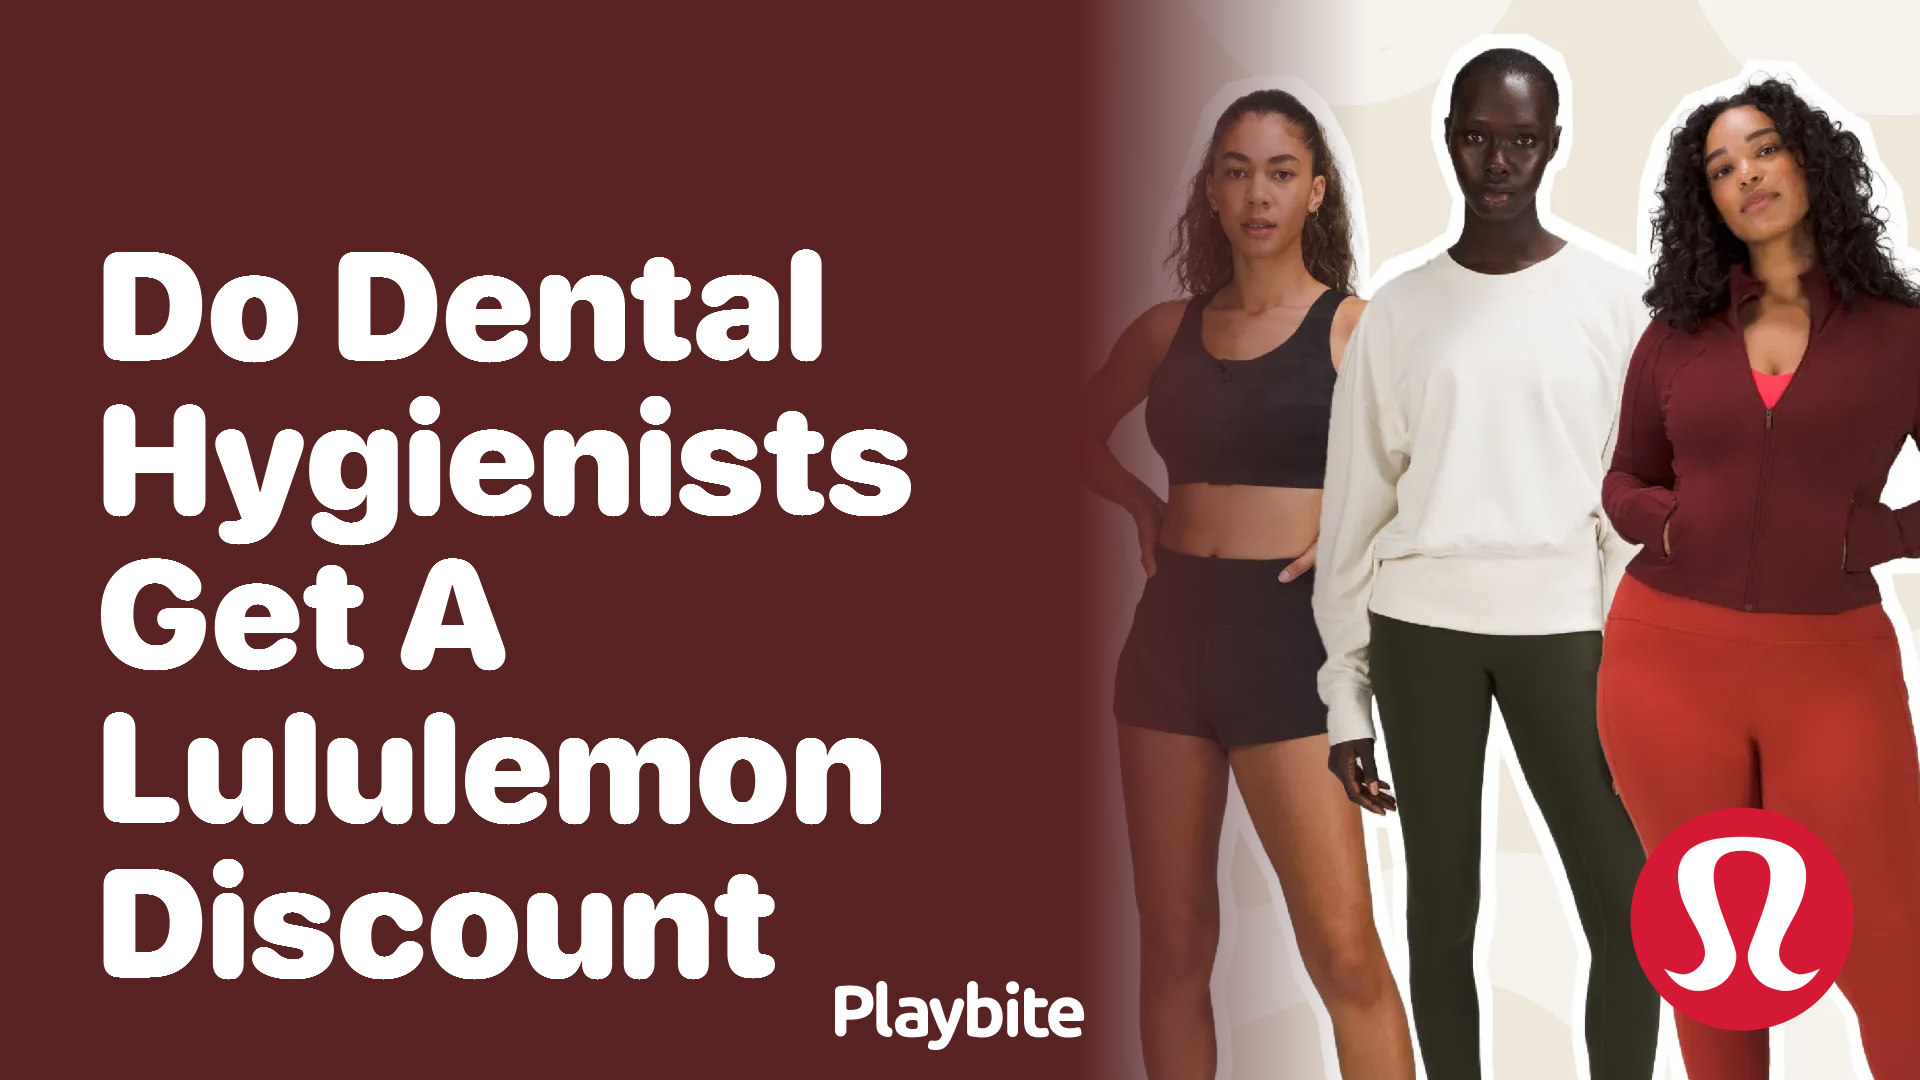 Do Dental Hygienists Get a Lululemon Discount? - Playbite